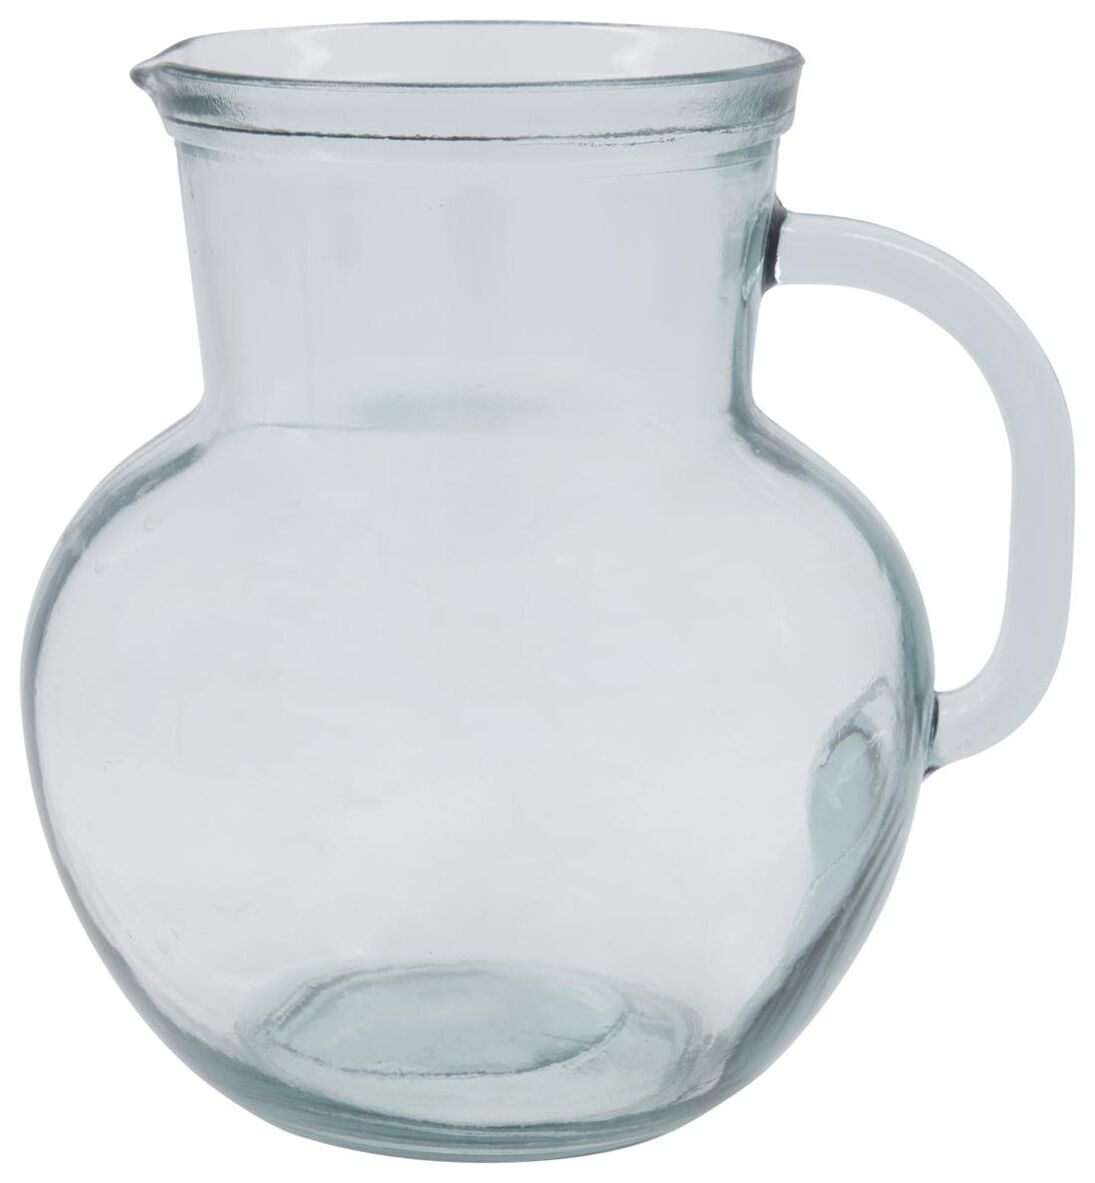 Wedstrijd Ploeg bedenken karaf 1.3L recycled glas - HEMA